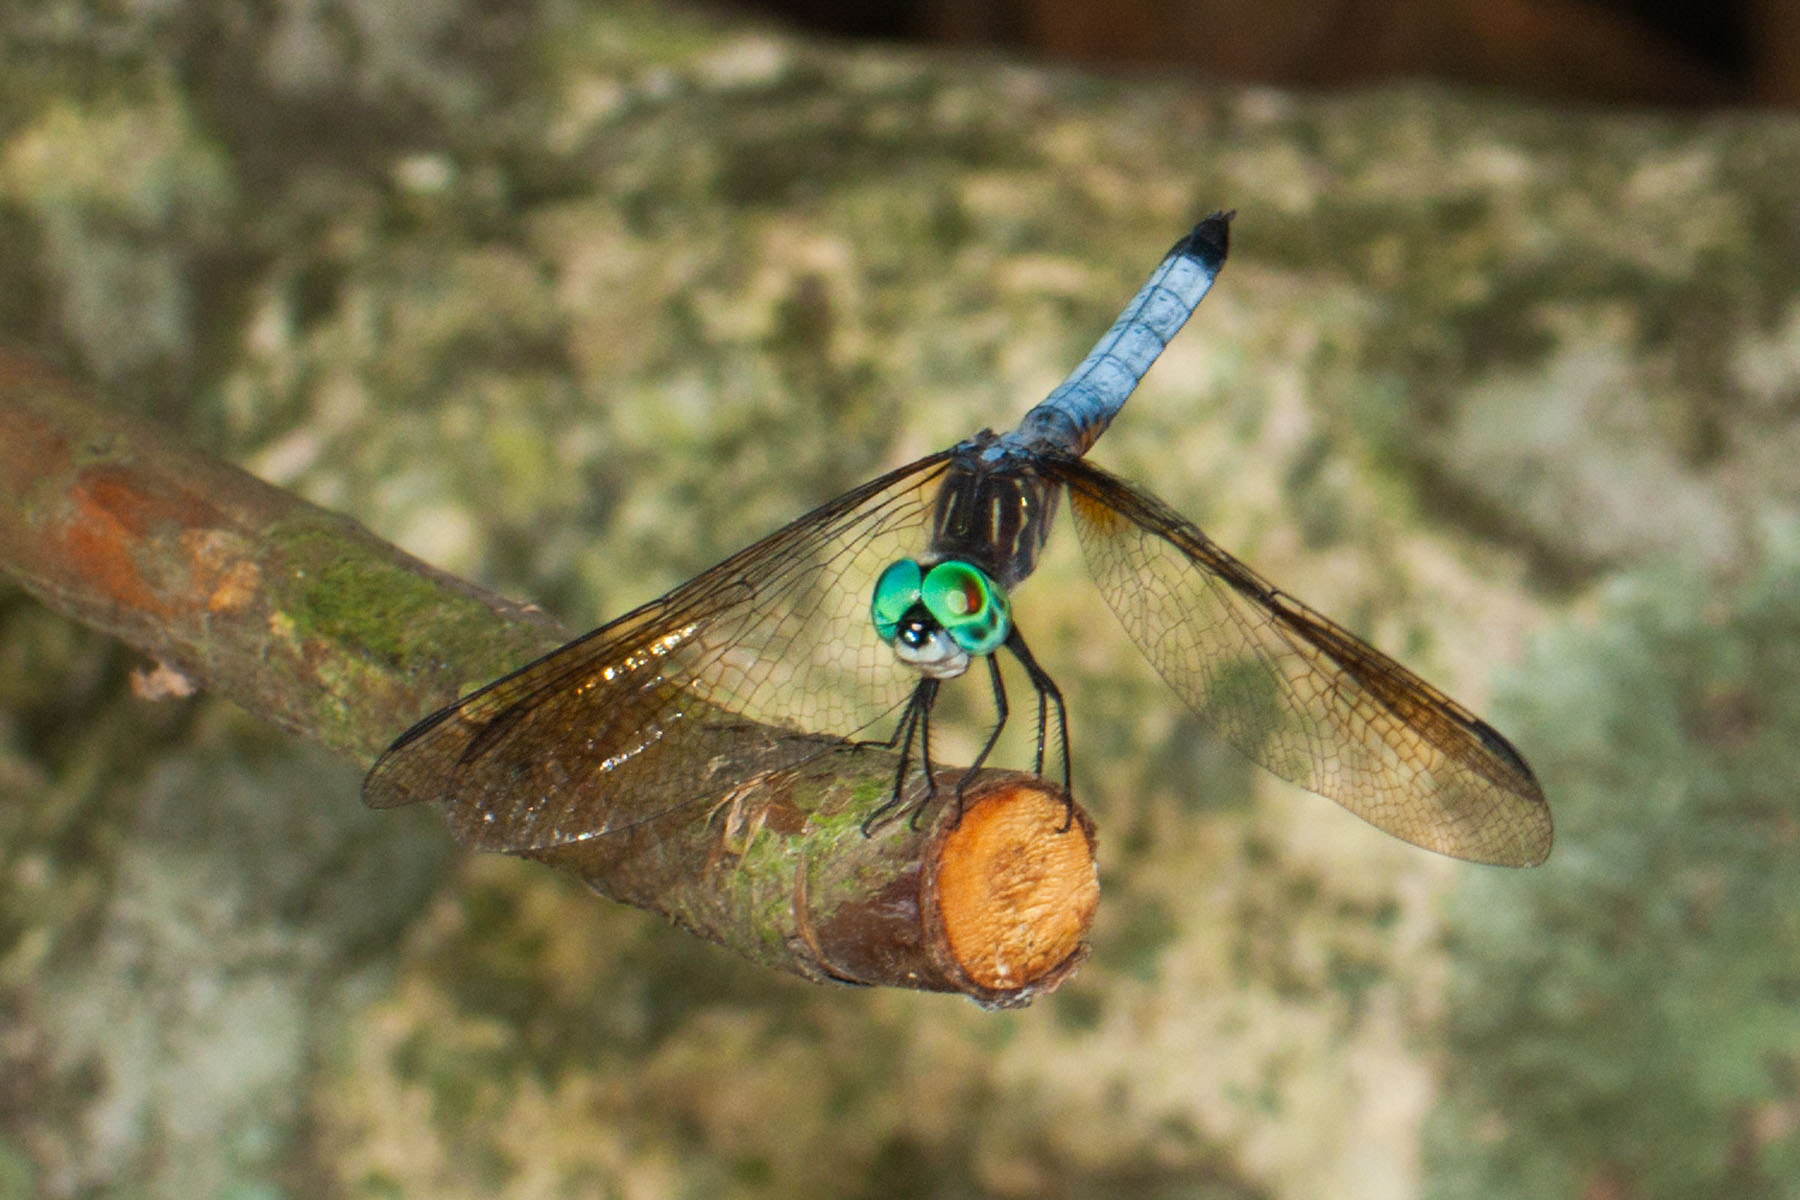 Dragonfly, Stony Brook Audubon Refuge with Canon G6 camera.  Click for next photo.